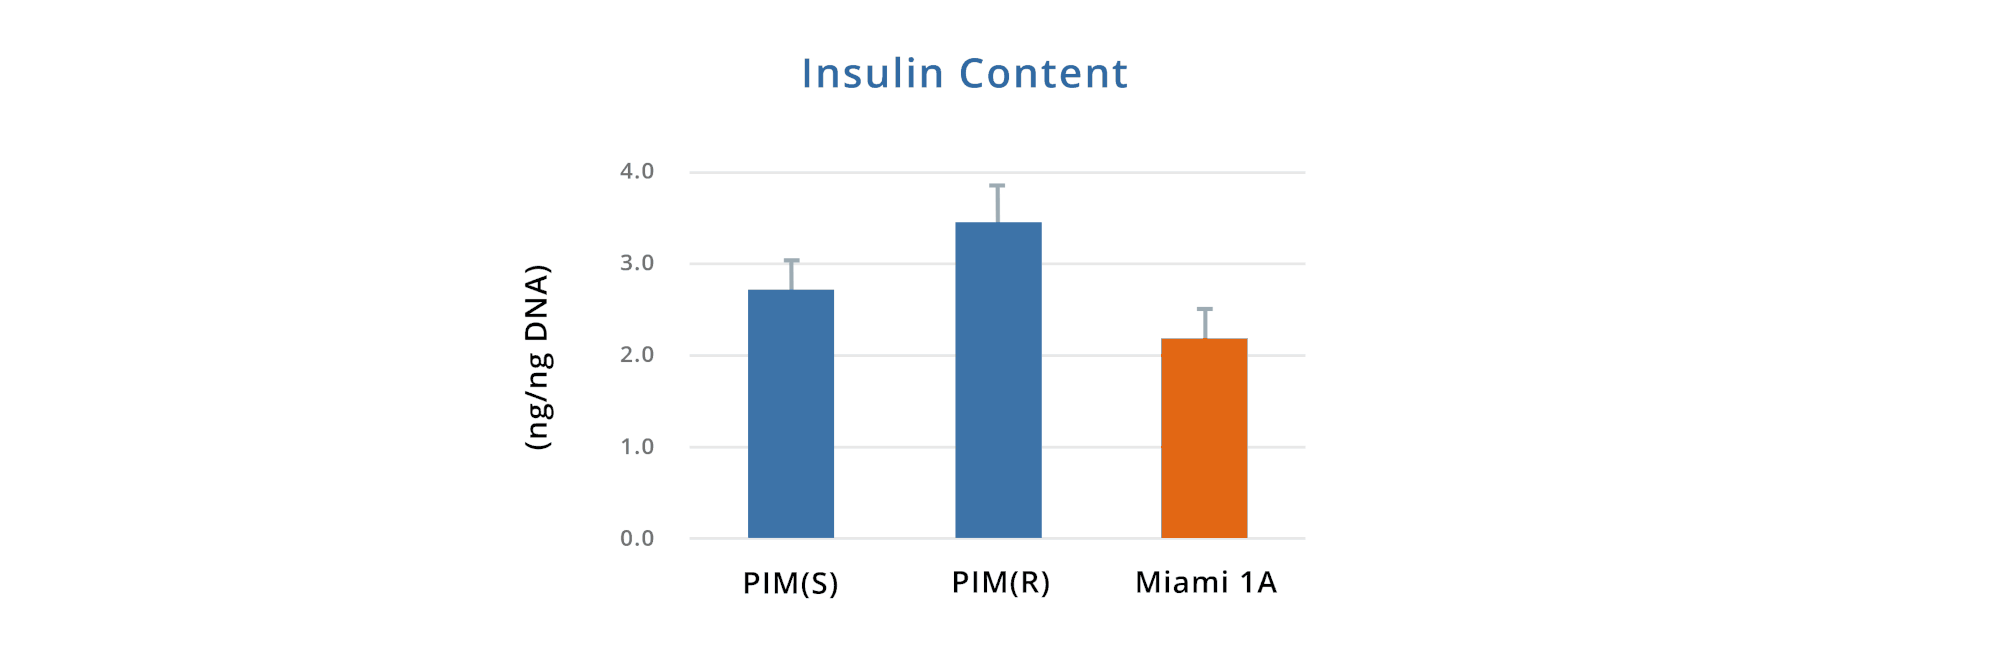 Insulin Content Data